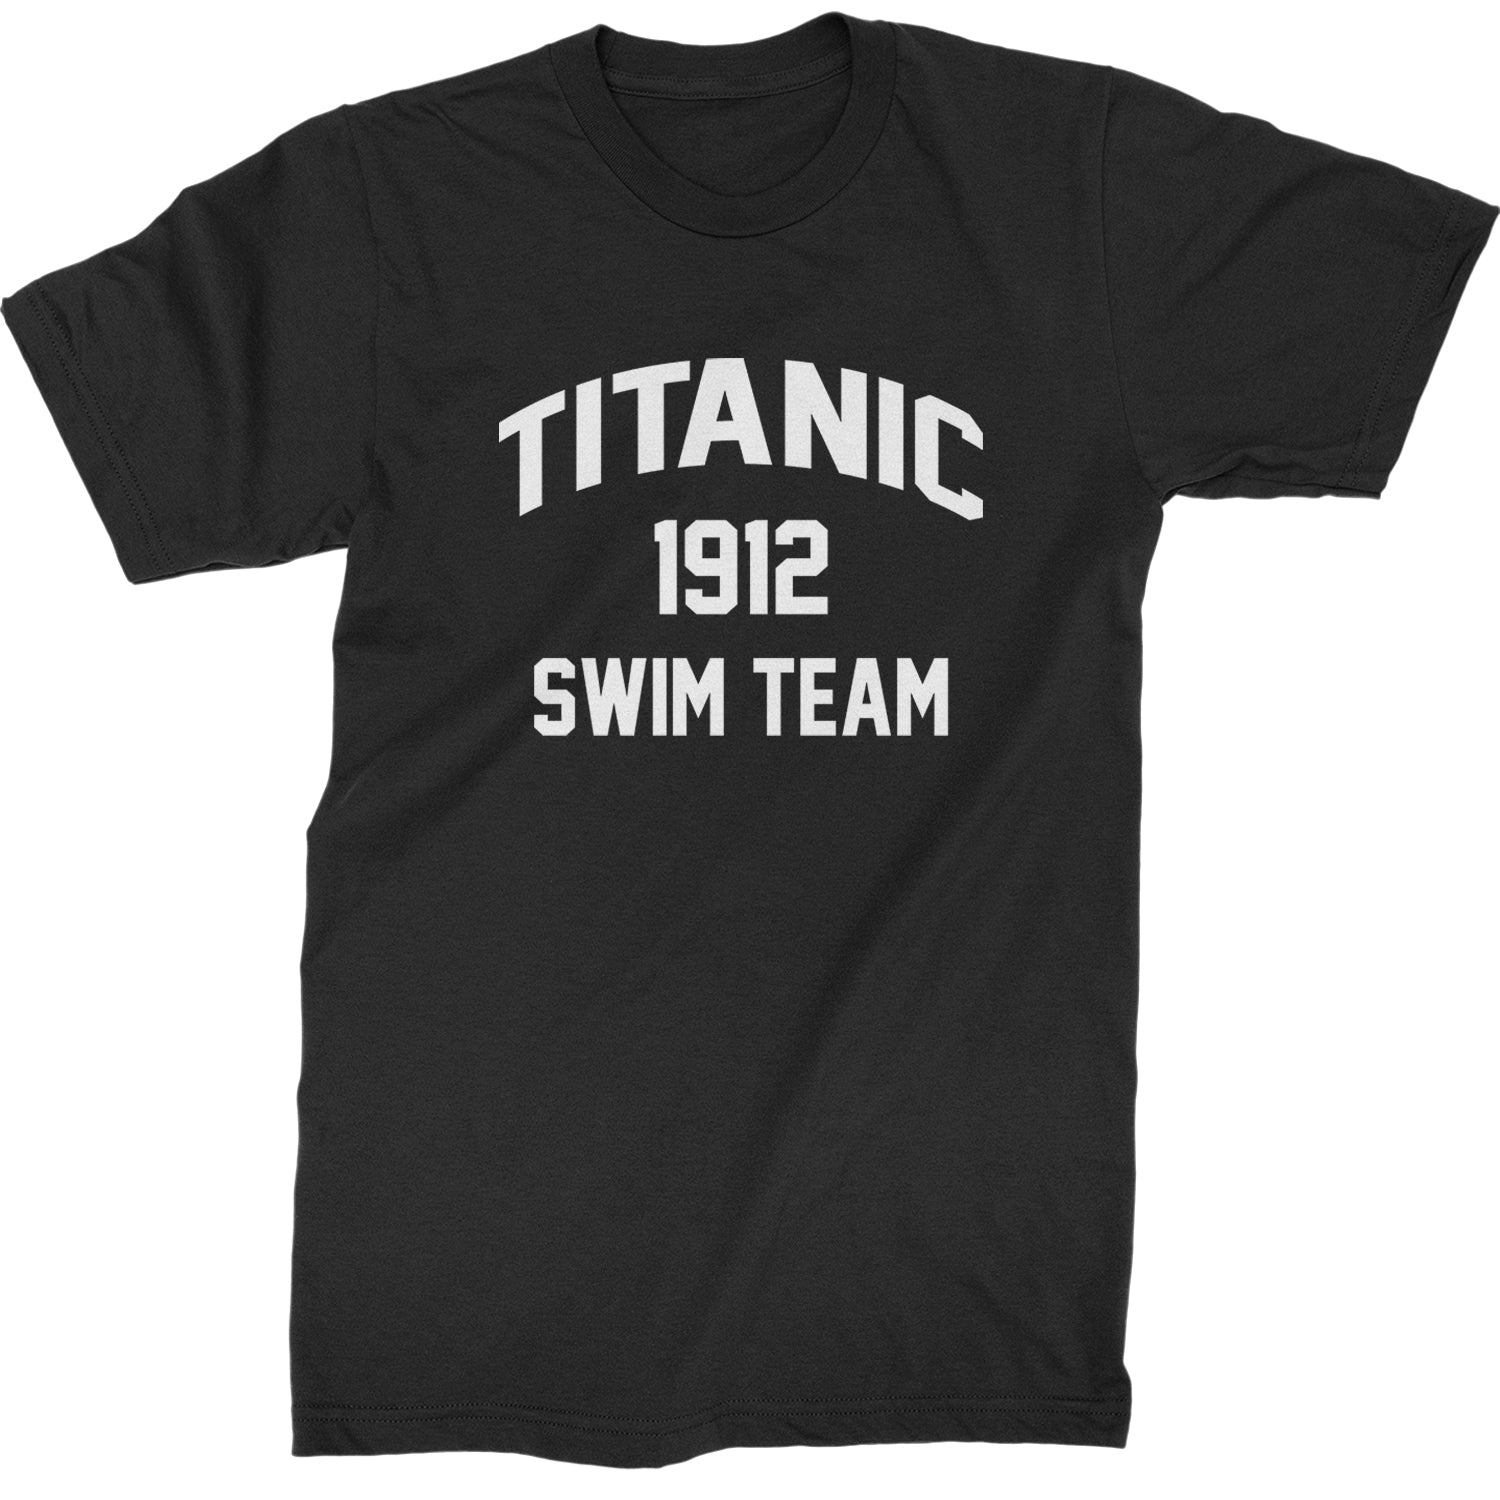 Titanic Swim Team 1912 Funny Cruise Mens T-shirt